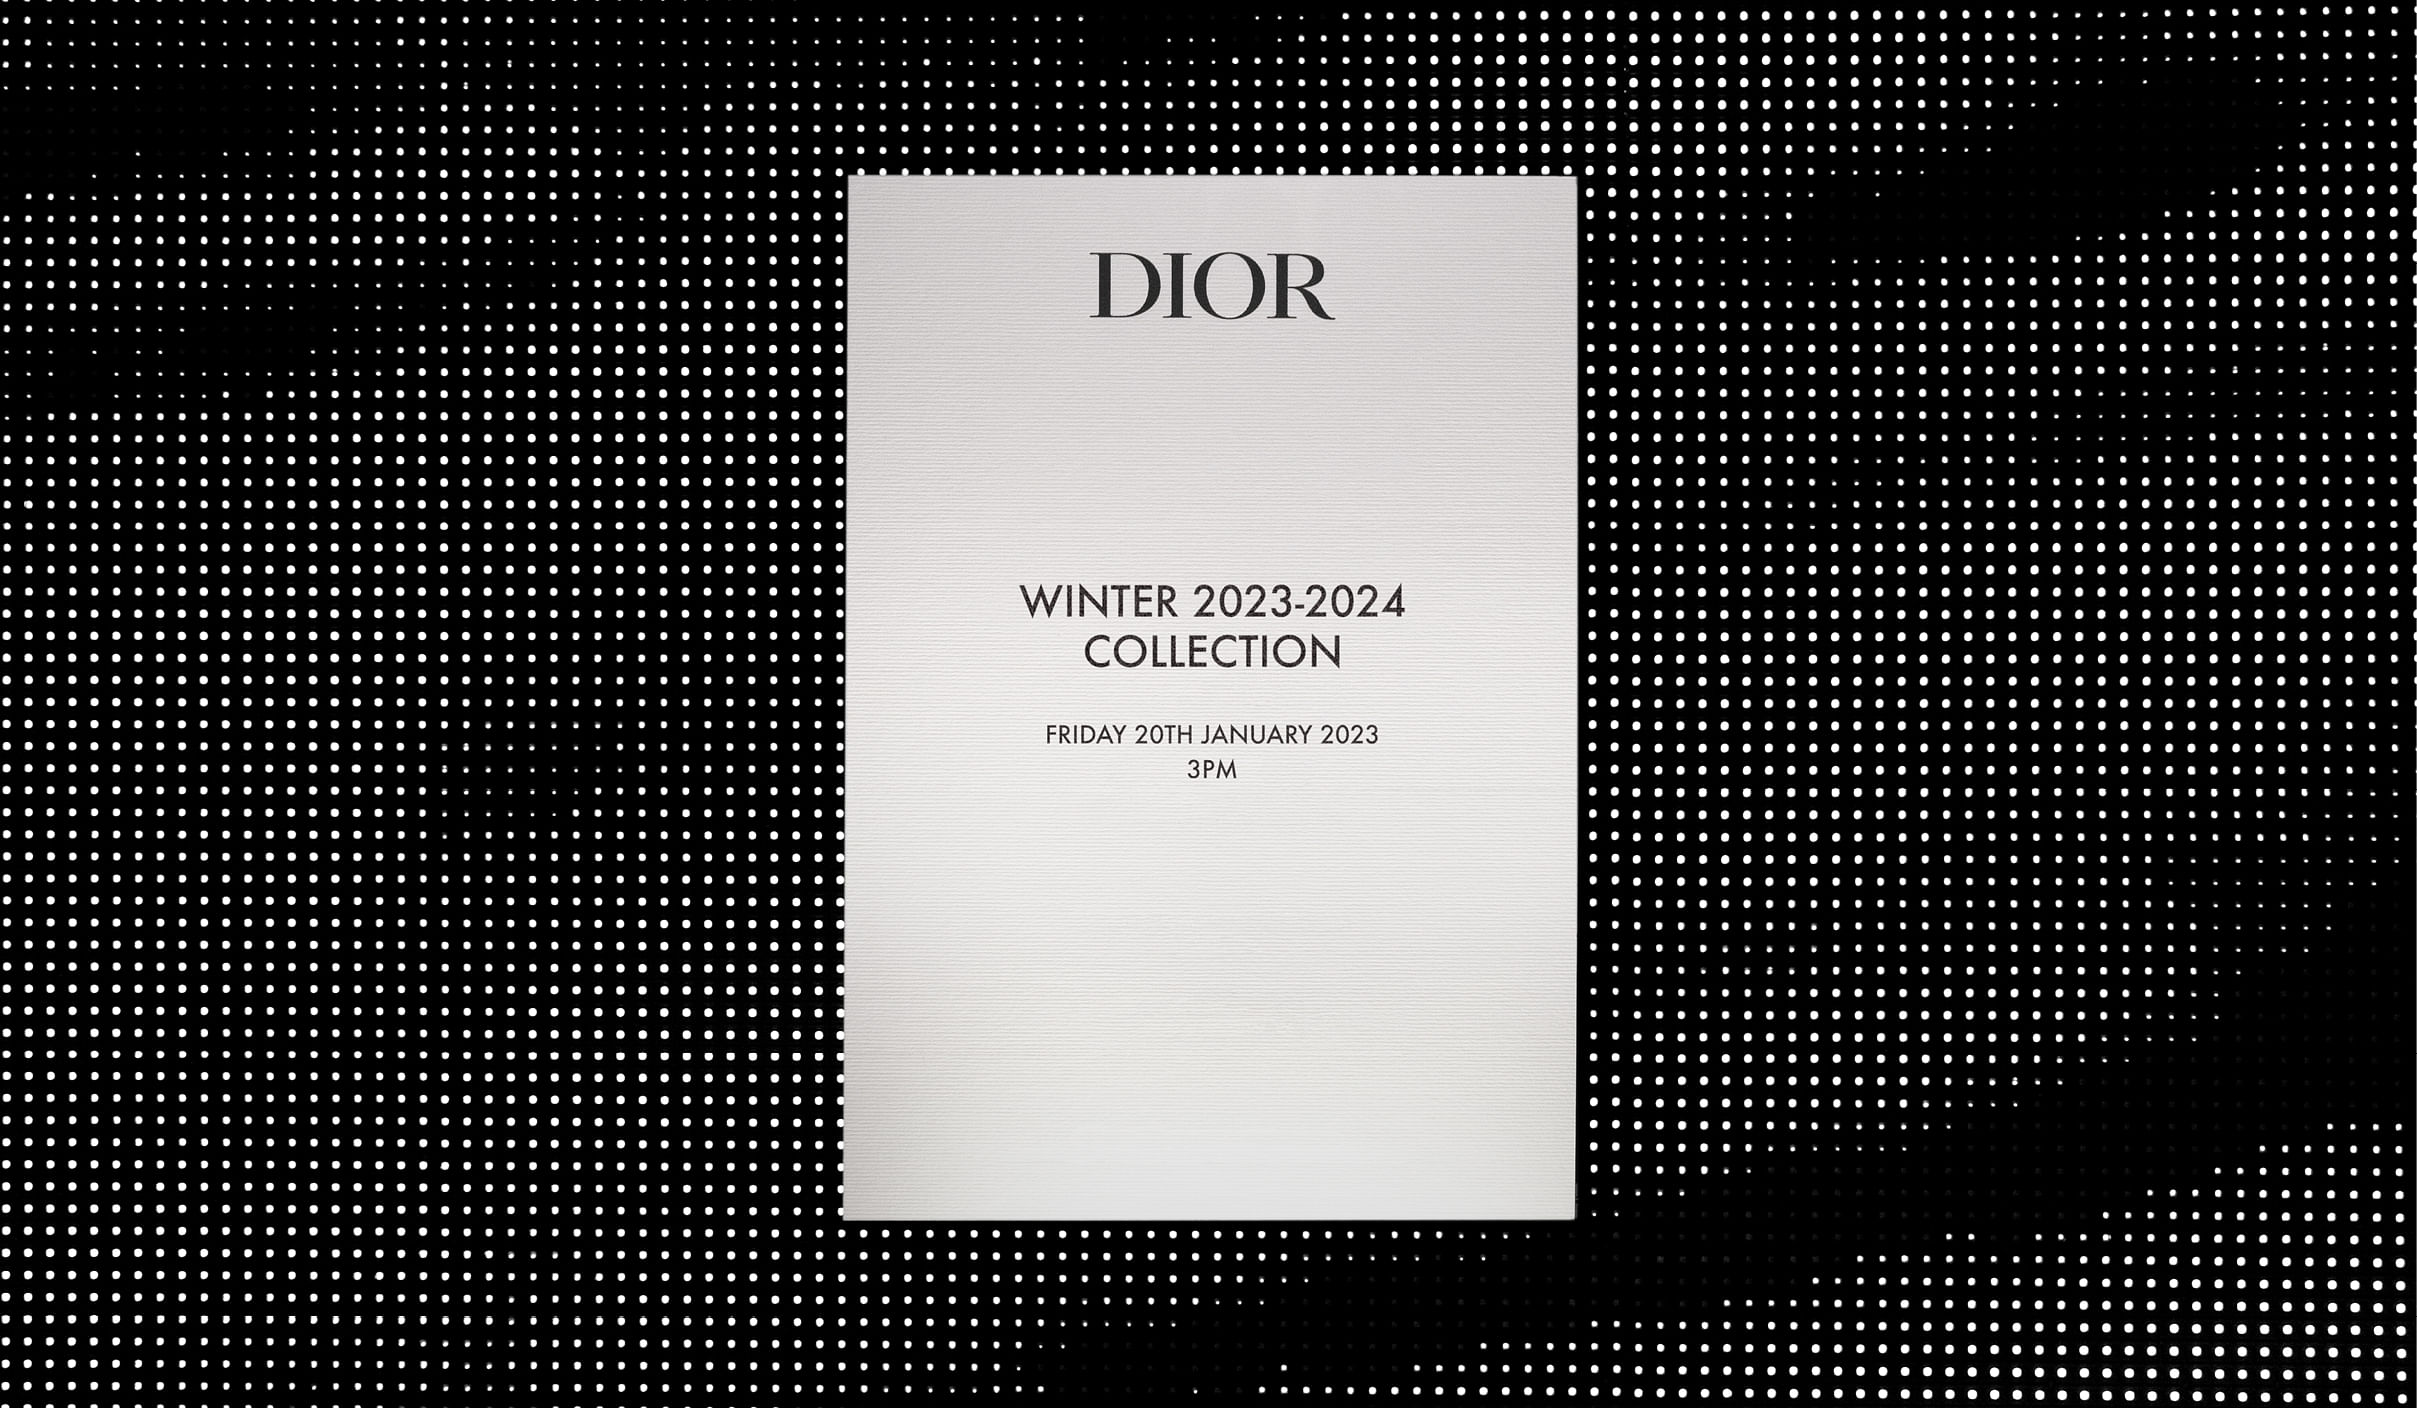 Watch The Dior Men's Winter 2023-2024 Show Here